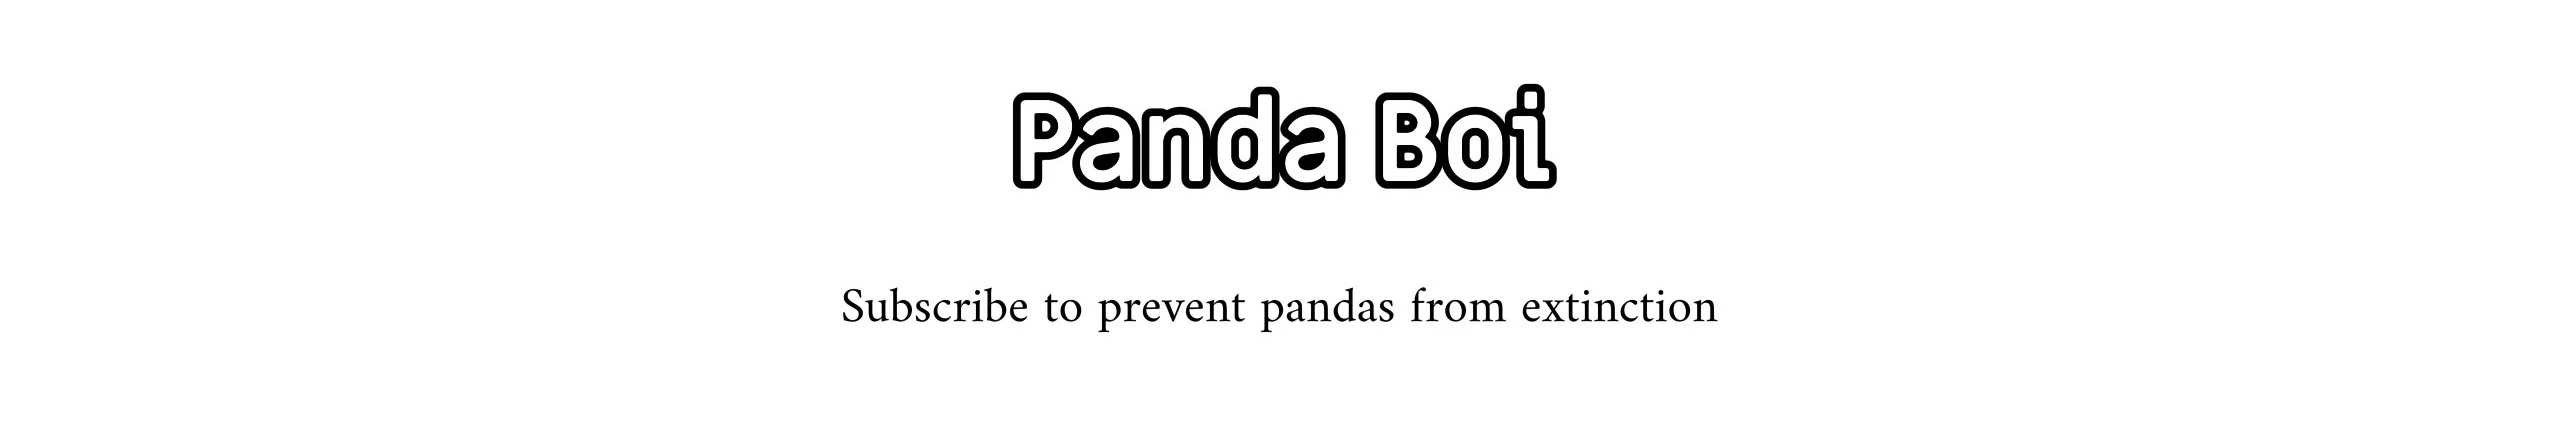 PANDA BOI's BANNER